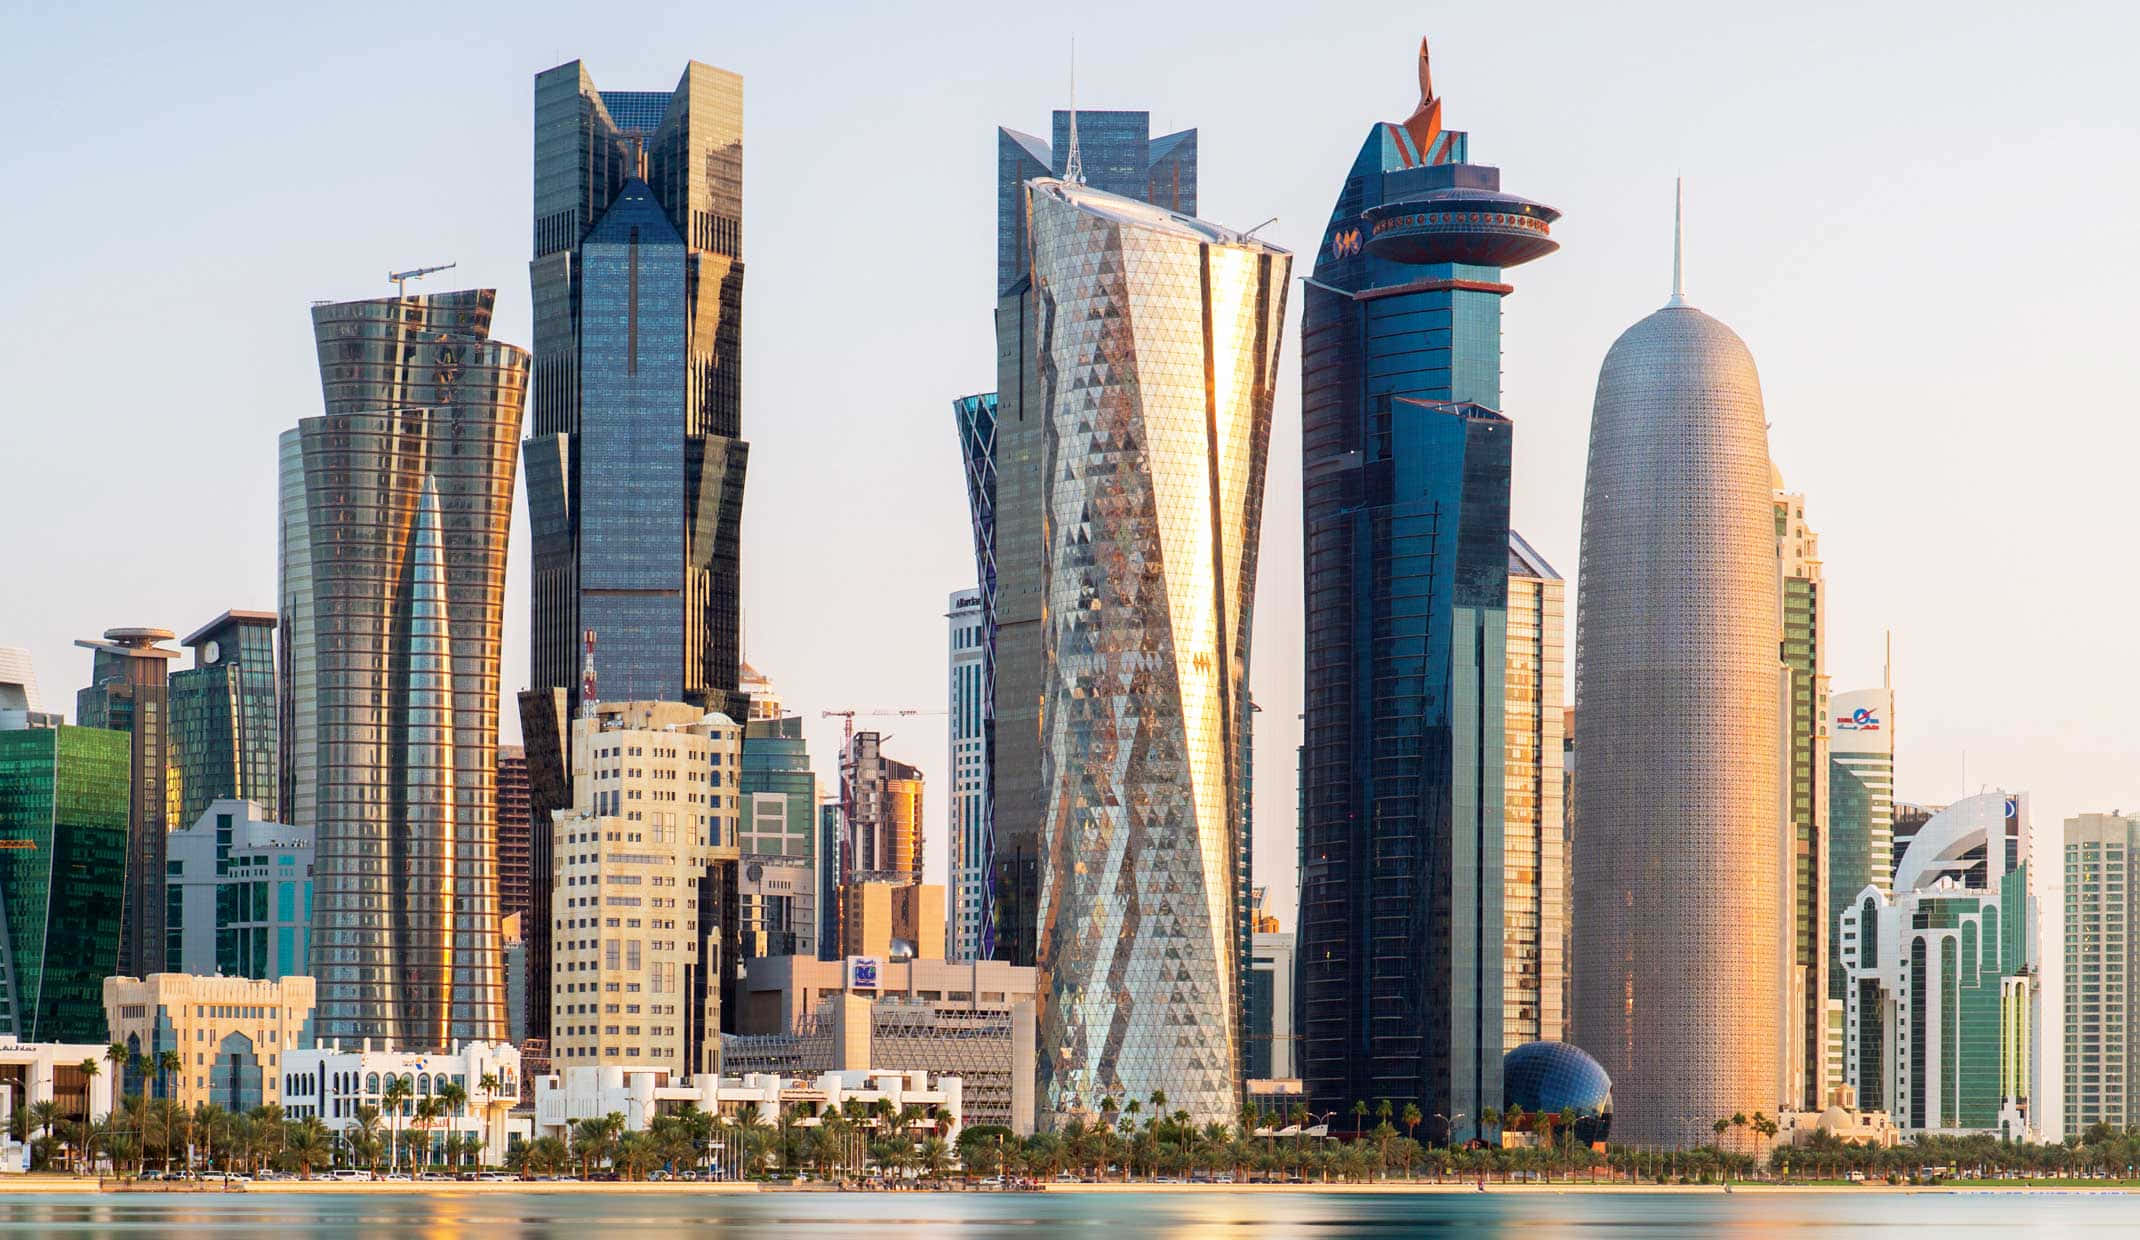 The Bridge of Qatar Connecting Skylines